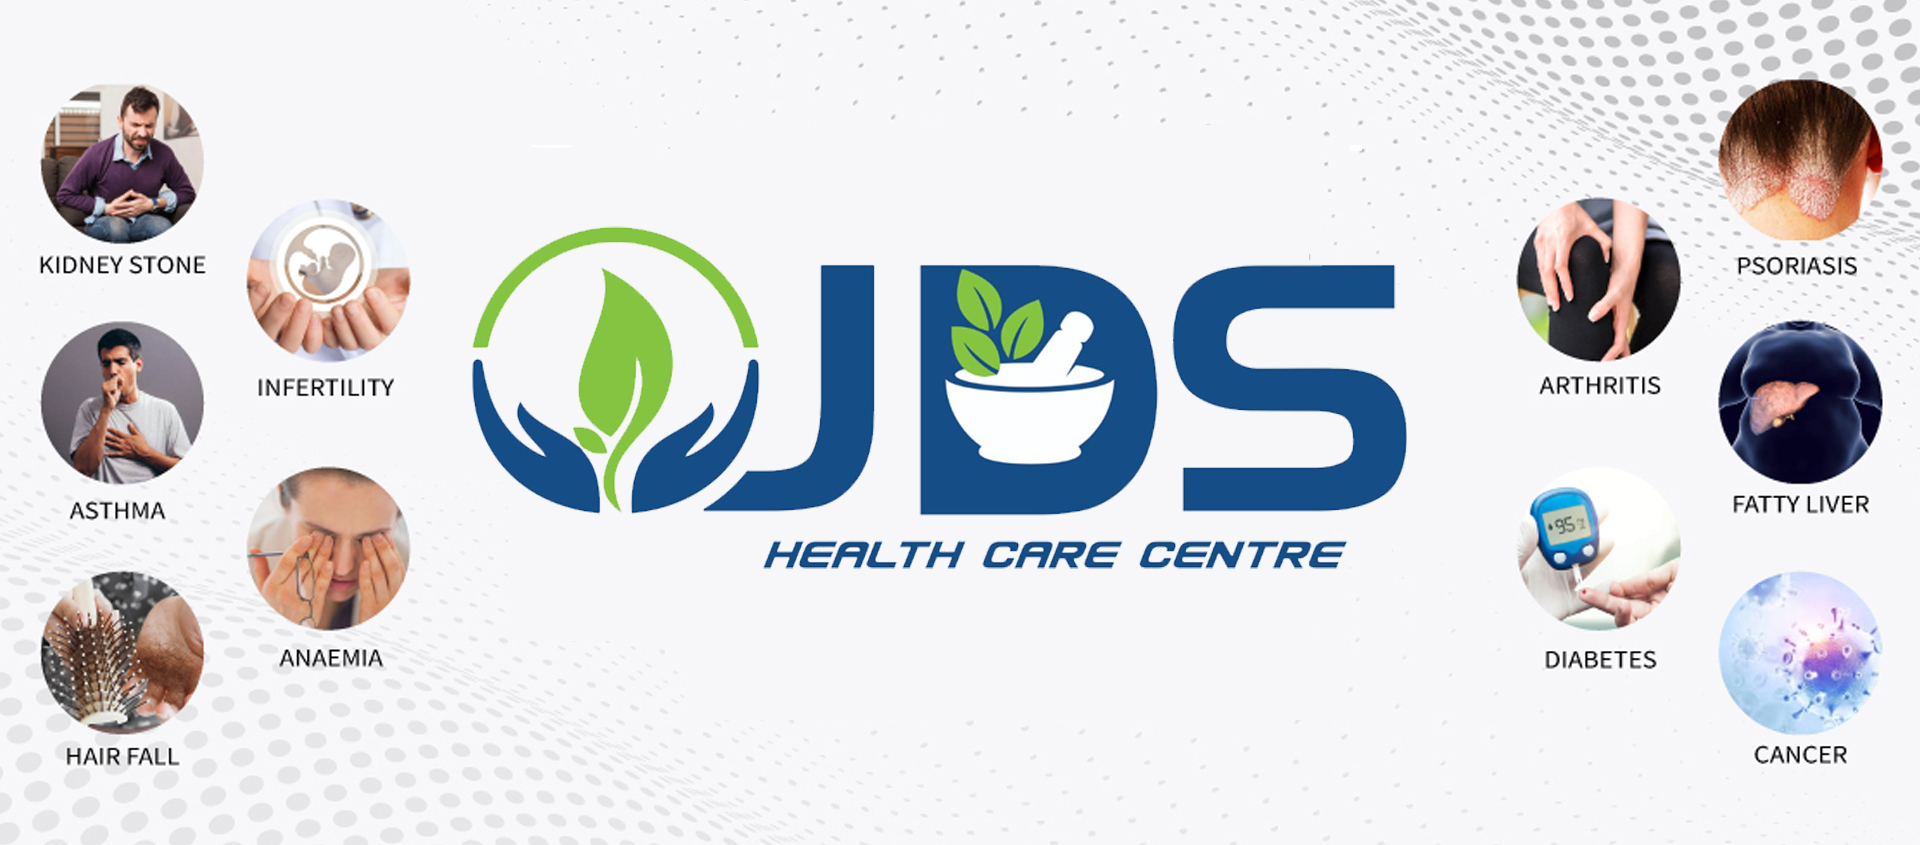 JDS HEALTH CARE CENTRE CHENNAI TAMILNADU INDIA